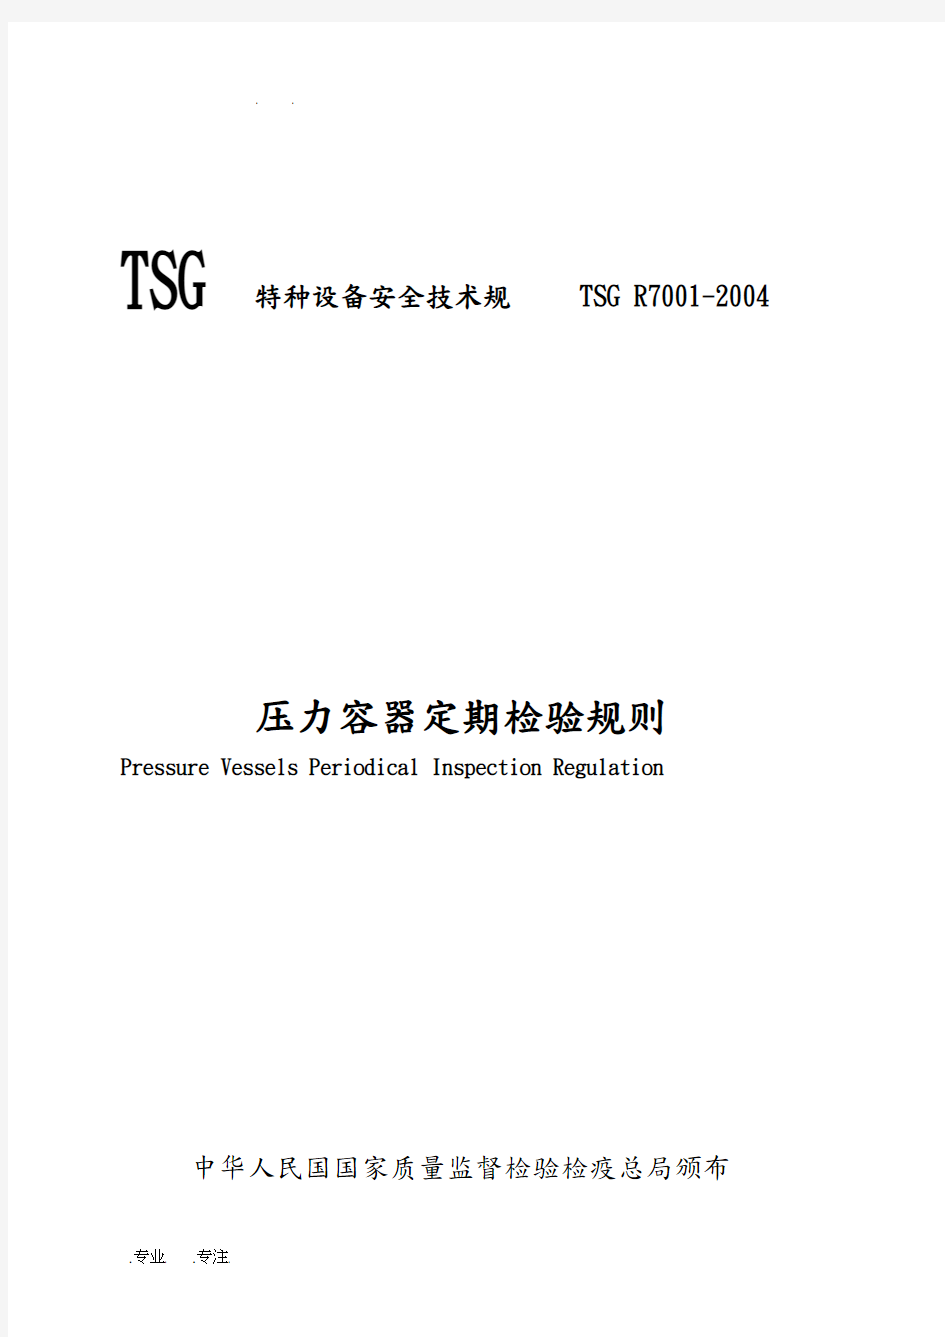 TSG特种设备安全技术规范_压力容器定期检验规则